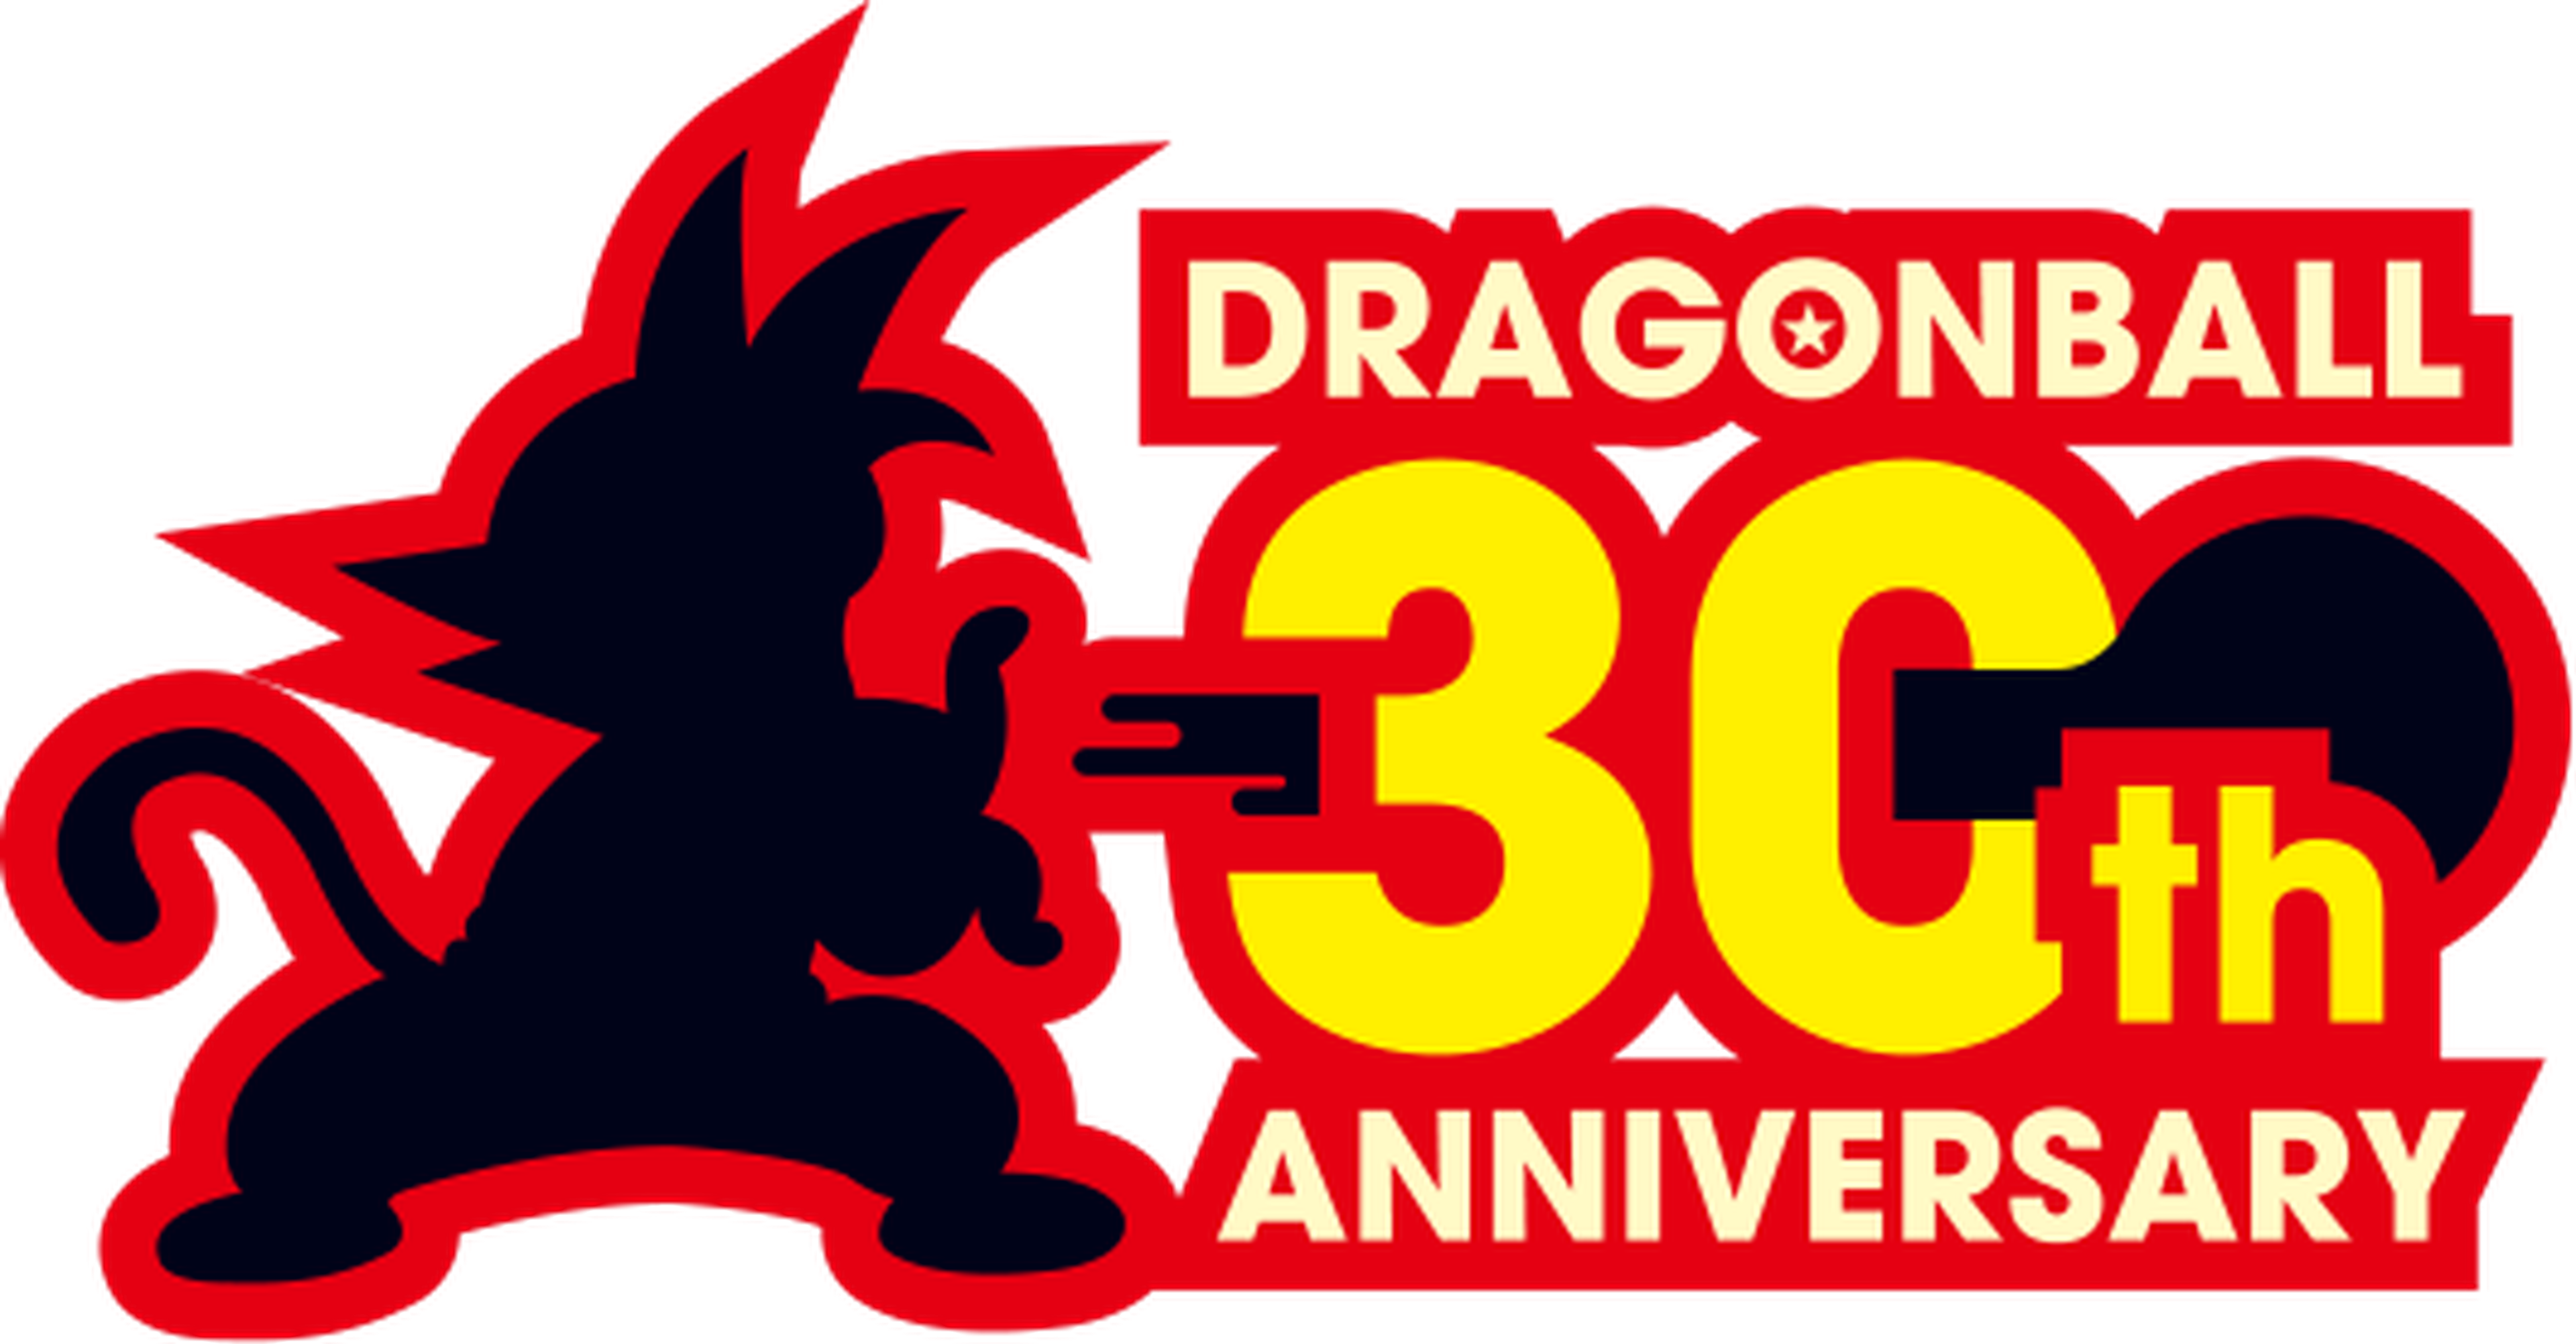 Dragon Ball estrena logo por su 30 aniversario